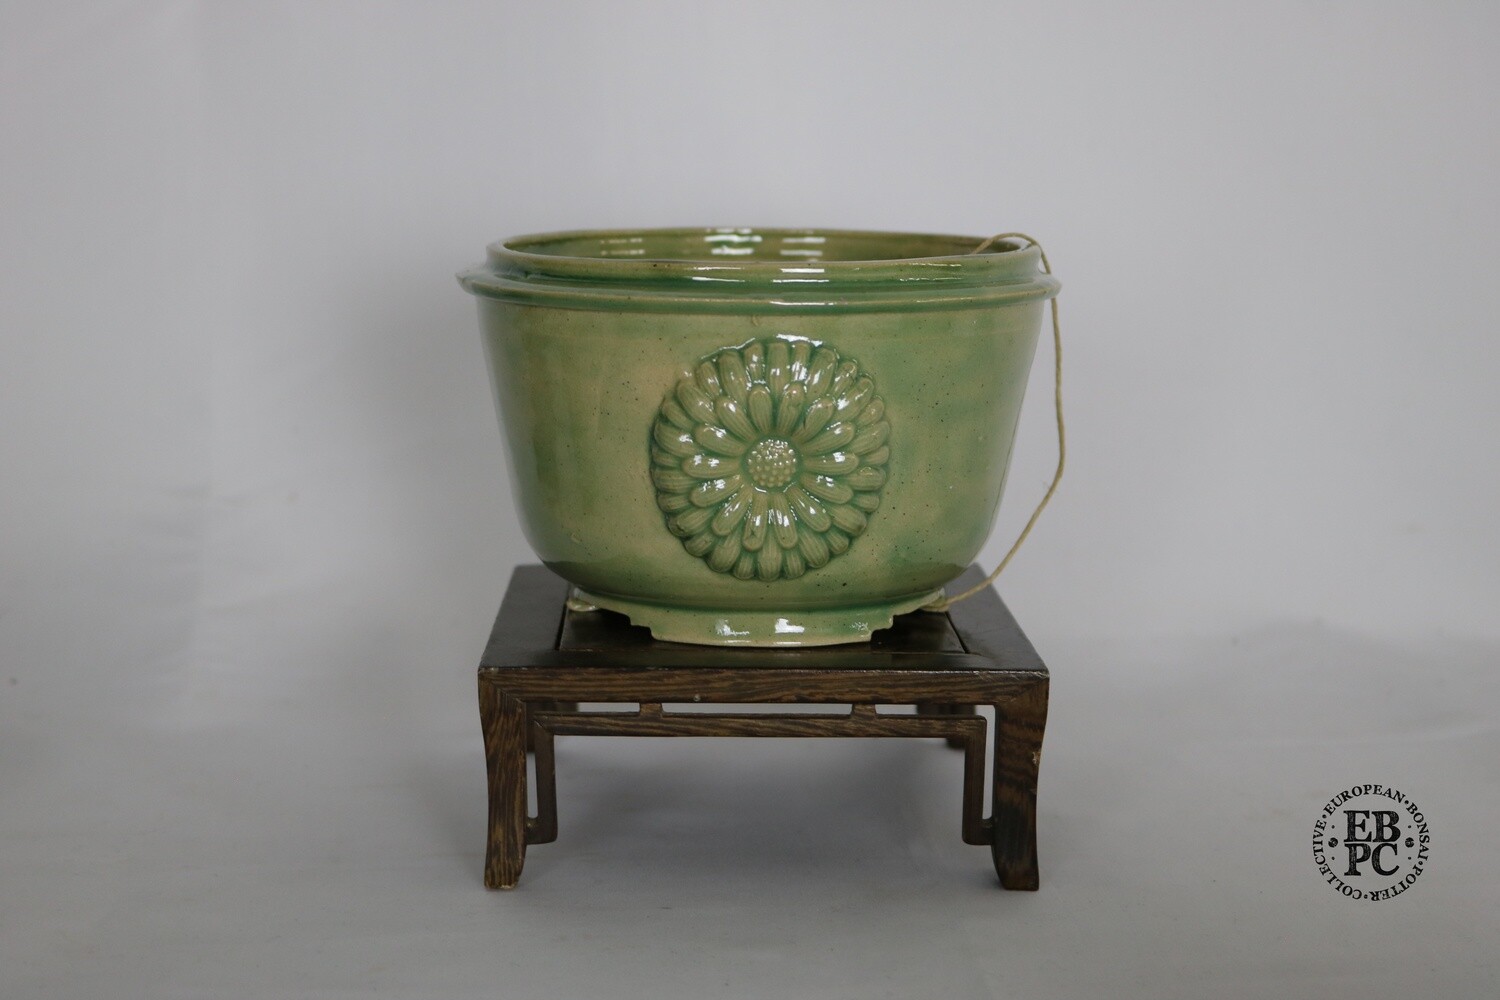 Amdouni Bonsai Pots - 14.4cm; Round; Celadon Glaze; Light Green; Flower Motifs in Relief; Recessed Feet; Sami Amdouni.